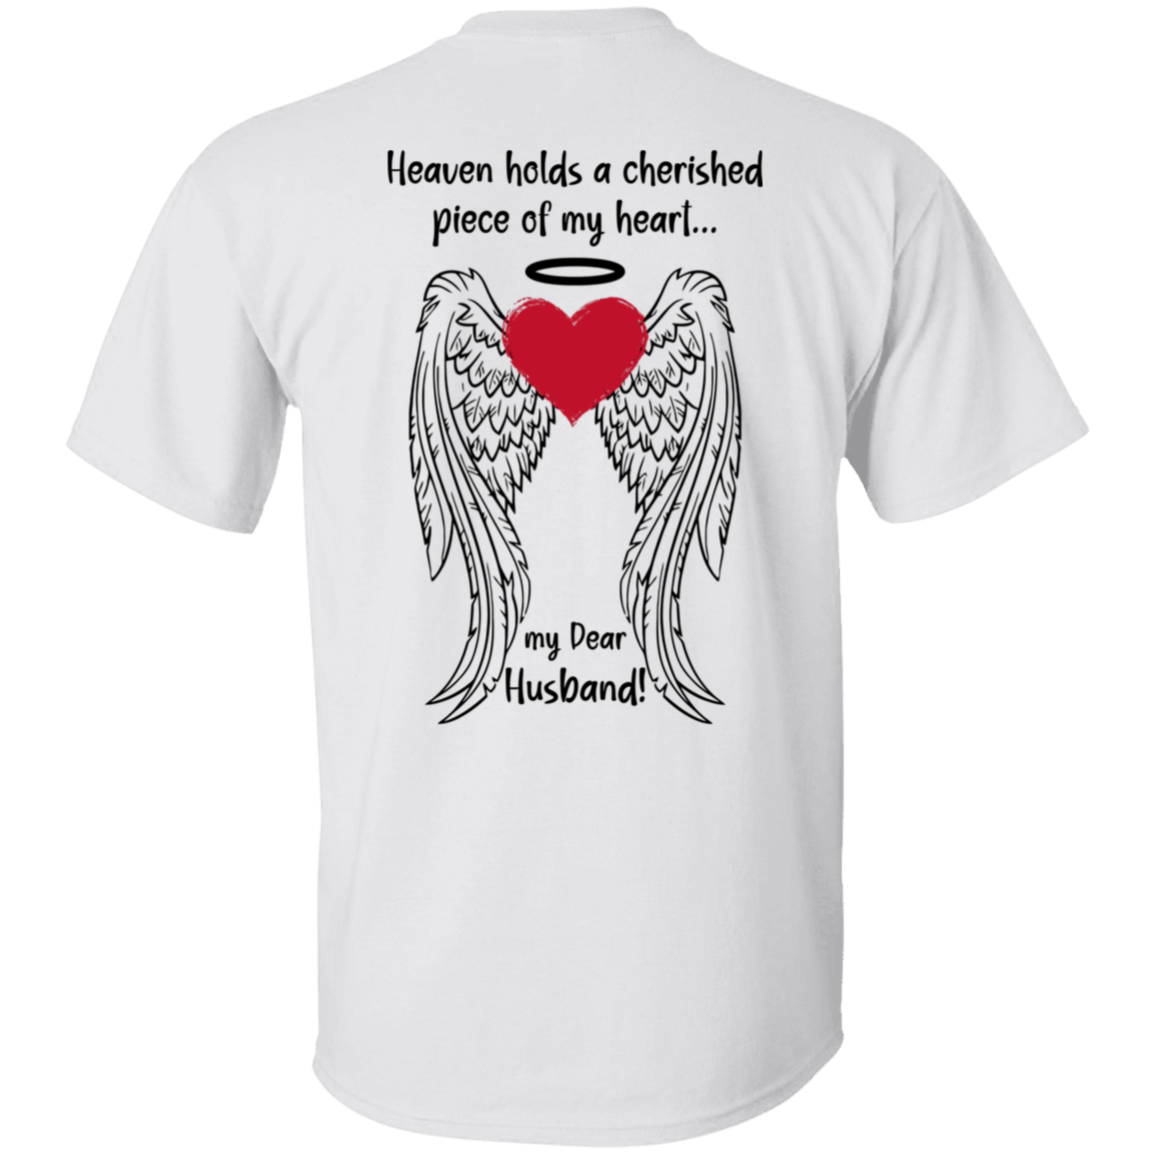 𝗛𝗨𝗦𝗕𝗔𝗡𝗗, HEAVENLY GUARDIAN - Unisex T-Shirt